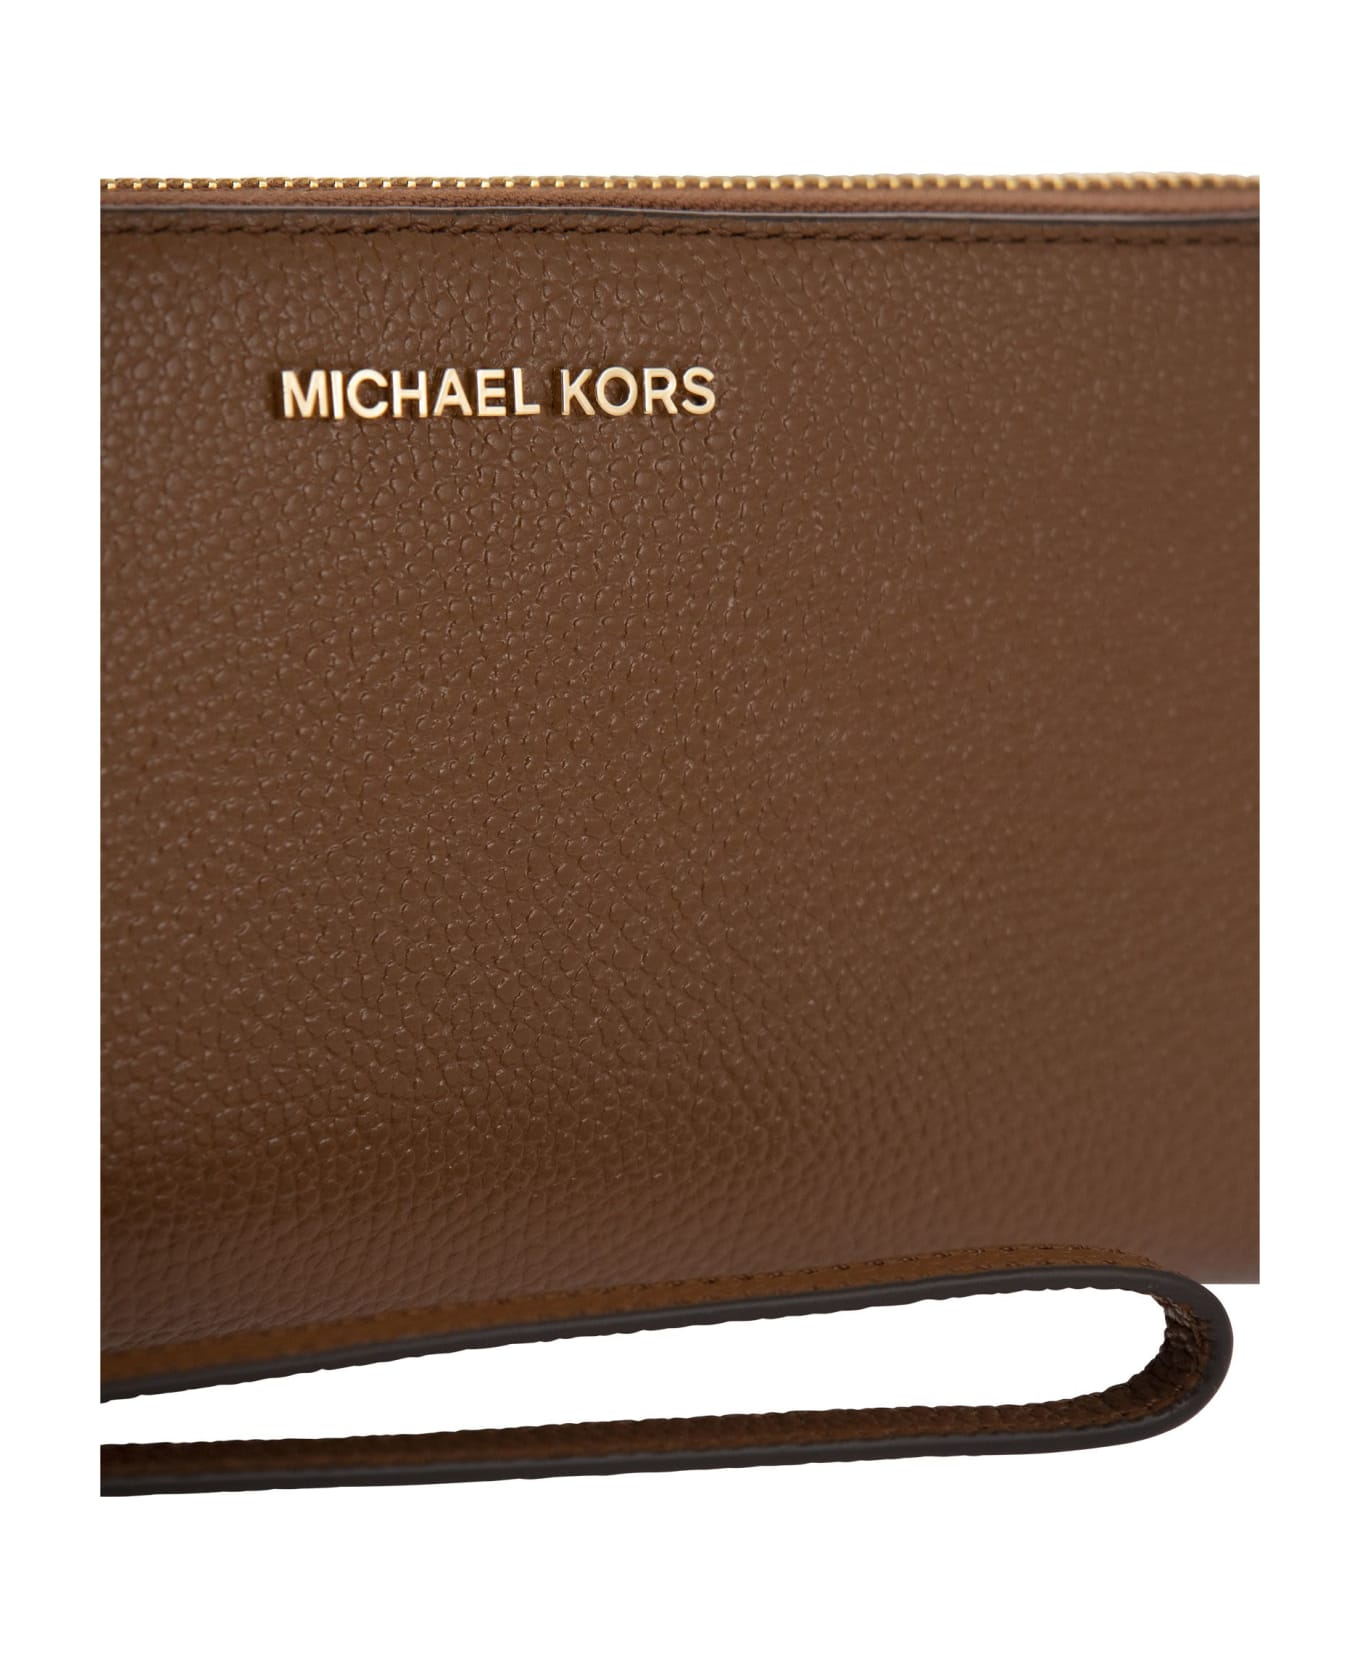 Michael Kors Jet Set - Grained Leather Wallet - Brown